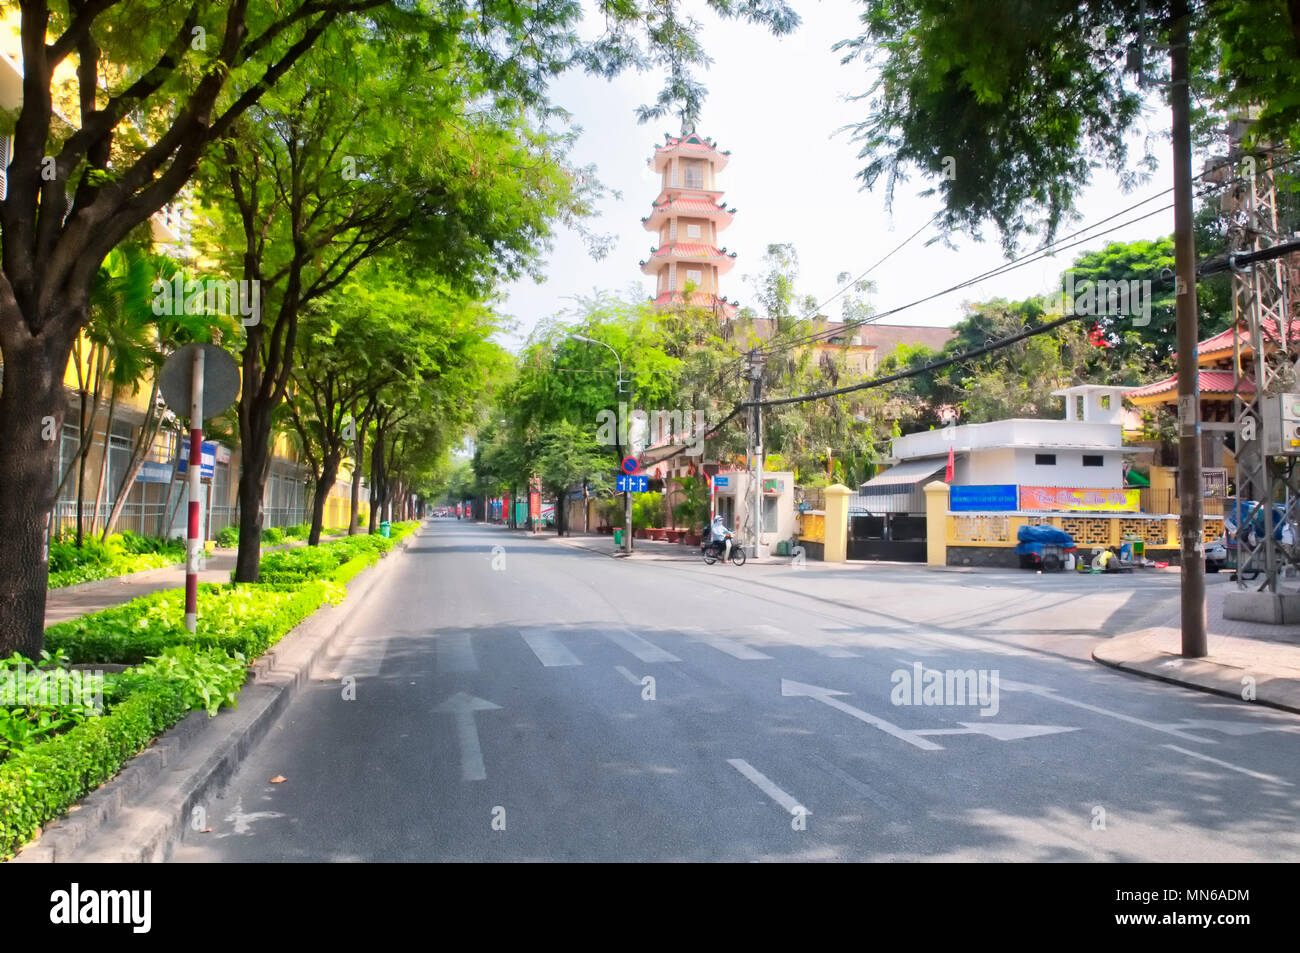 Februar 18, 2015 Ho Chi Minh City, Vietnam. Die Xa Loi Pagode steigen über die Straßen in Ho Chi Minh City oder Saigon im Süden Vietnams. Stockfoto